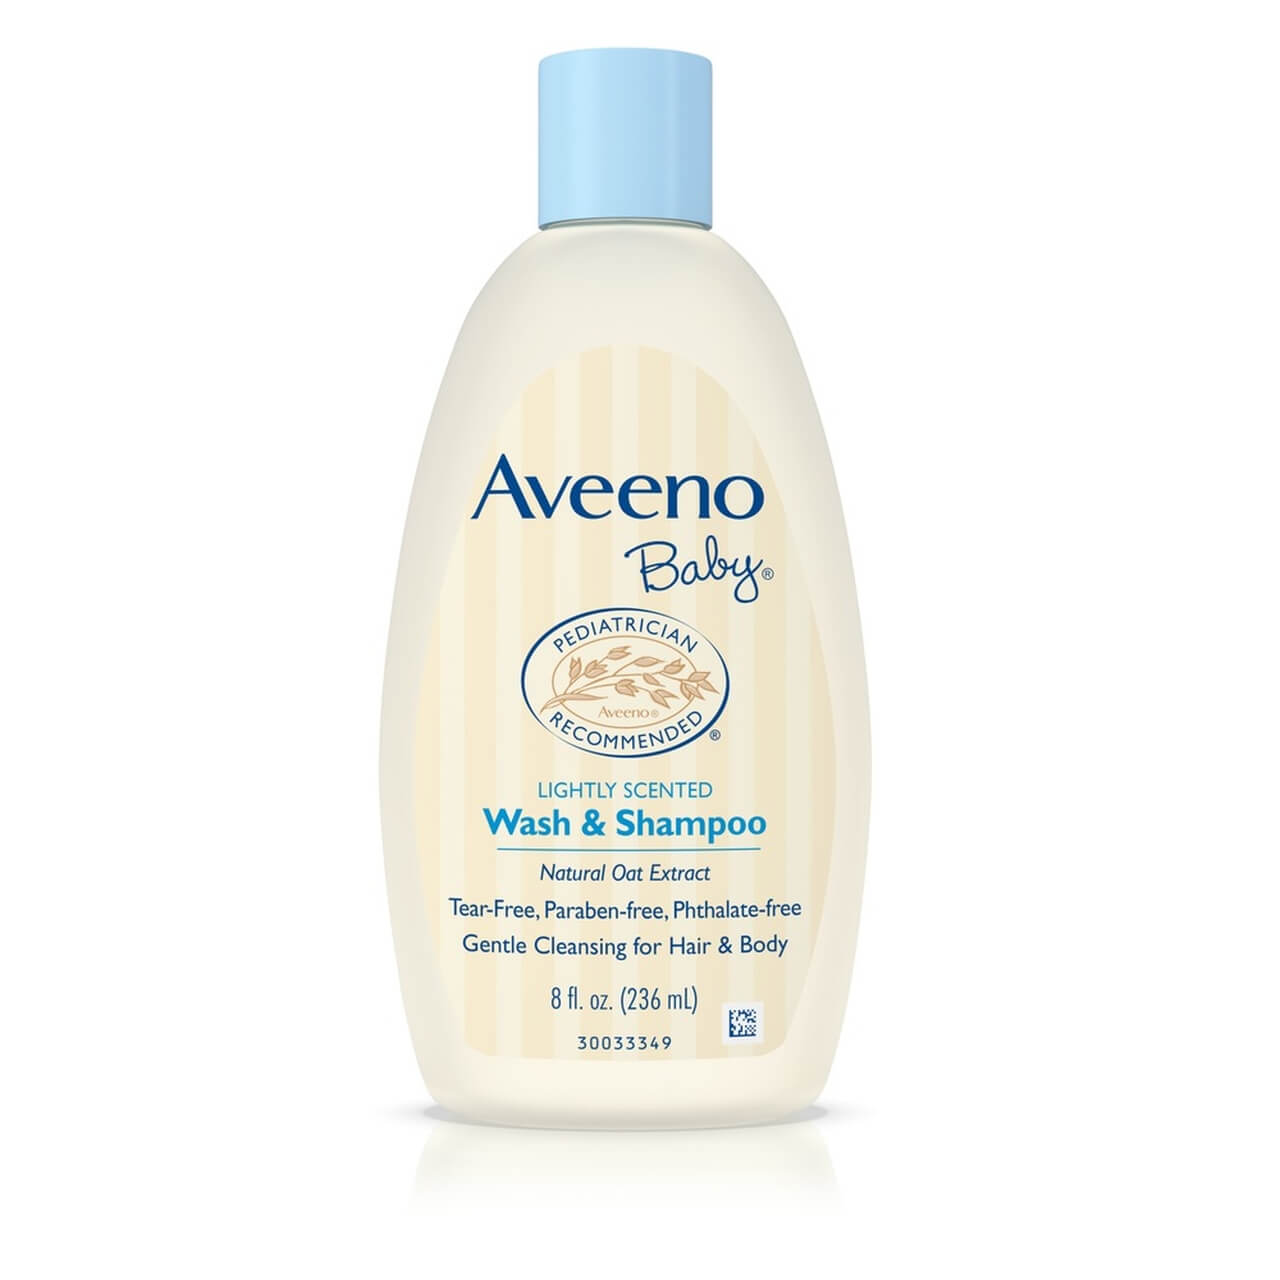 Aveeno Baby Shampoo contains natural ingredients